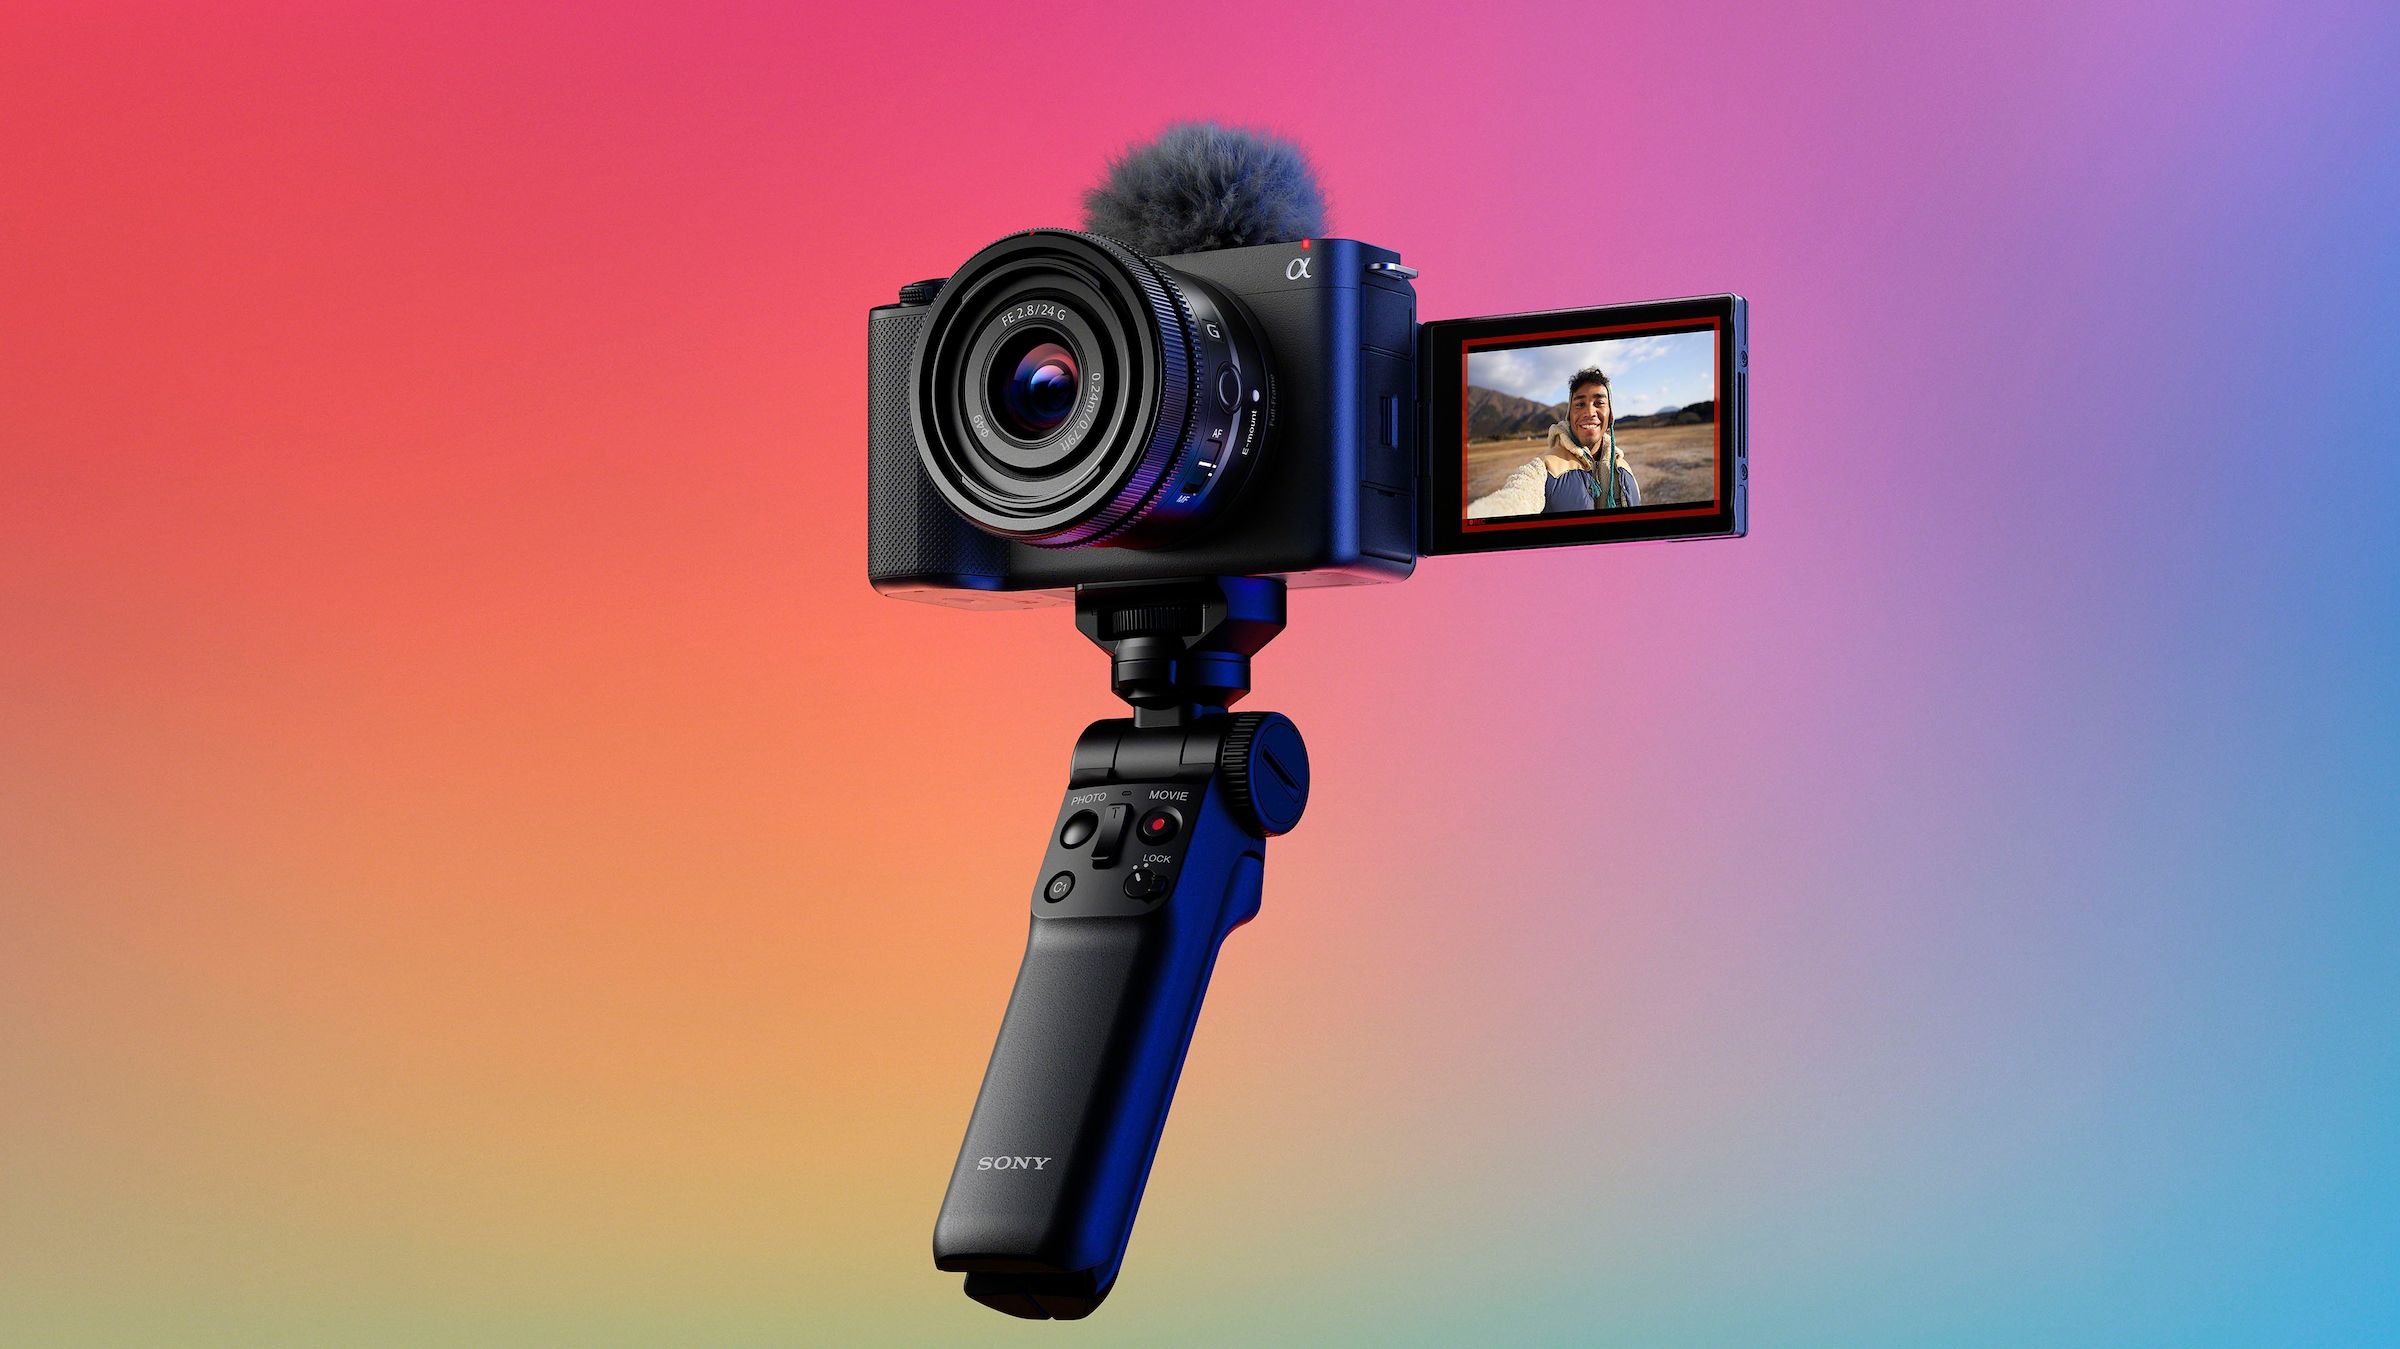 Sony Systemkamera »ZV-E1«, 12,1 MP, Bluetooth-WLAN (Wi-Fi)